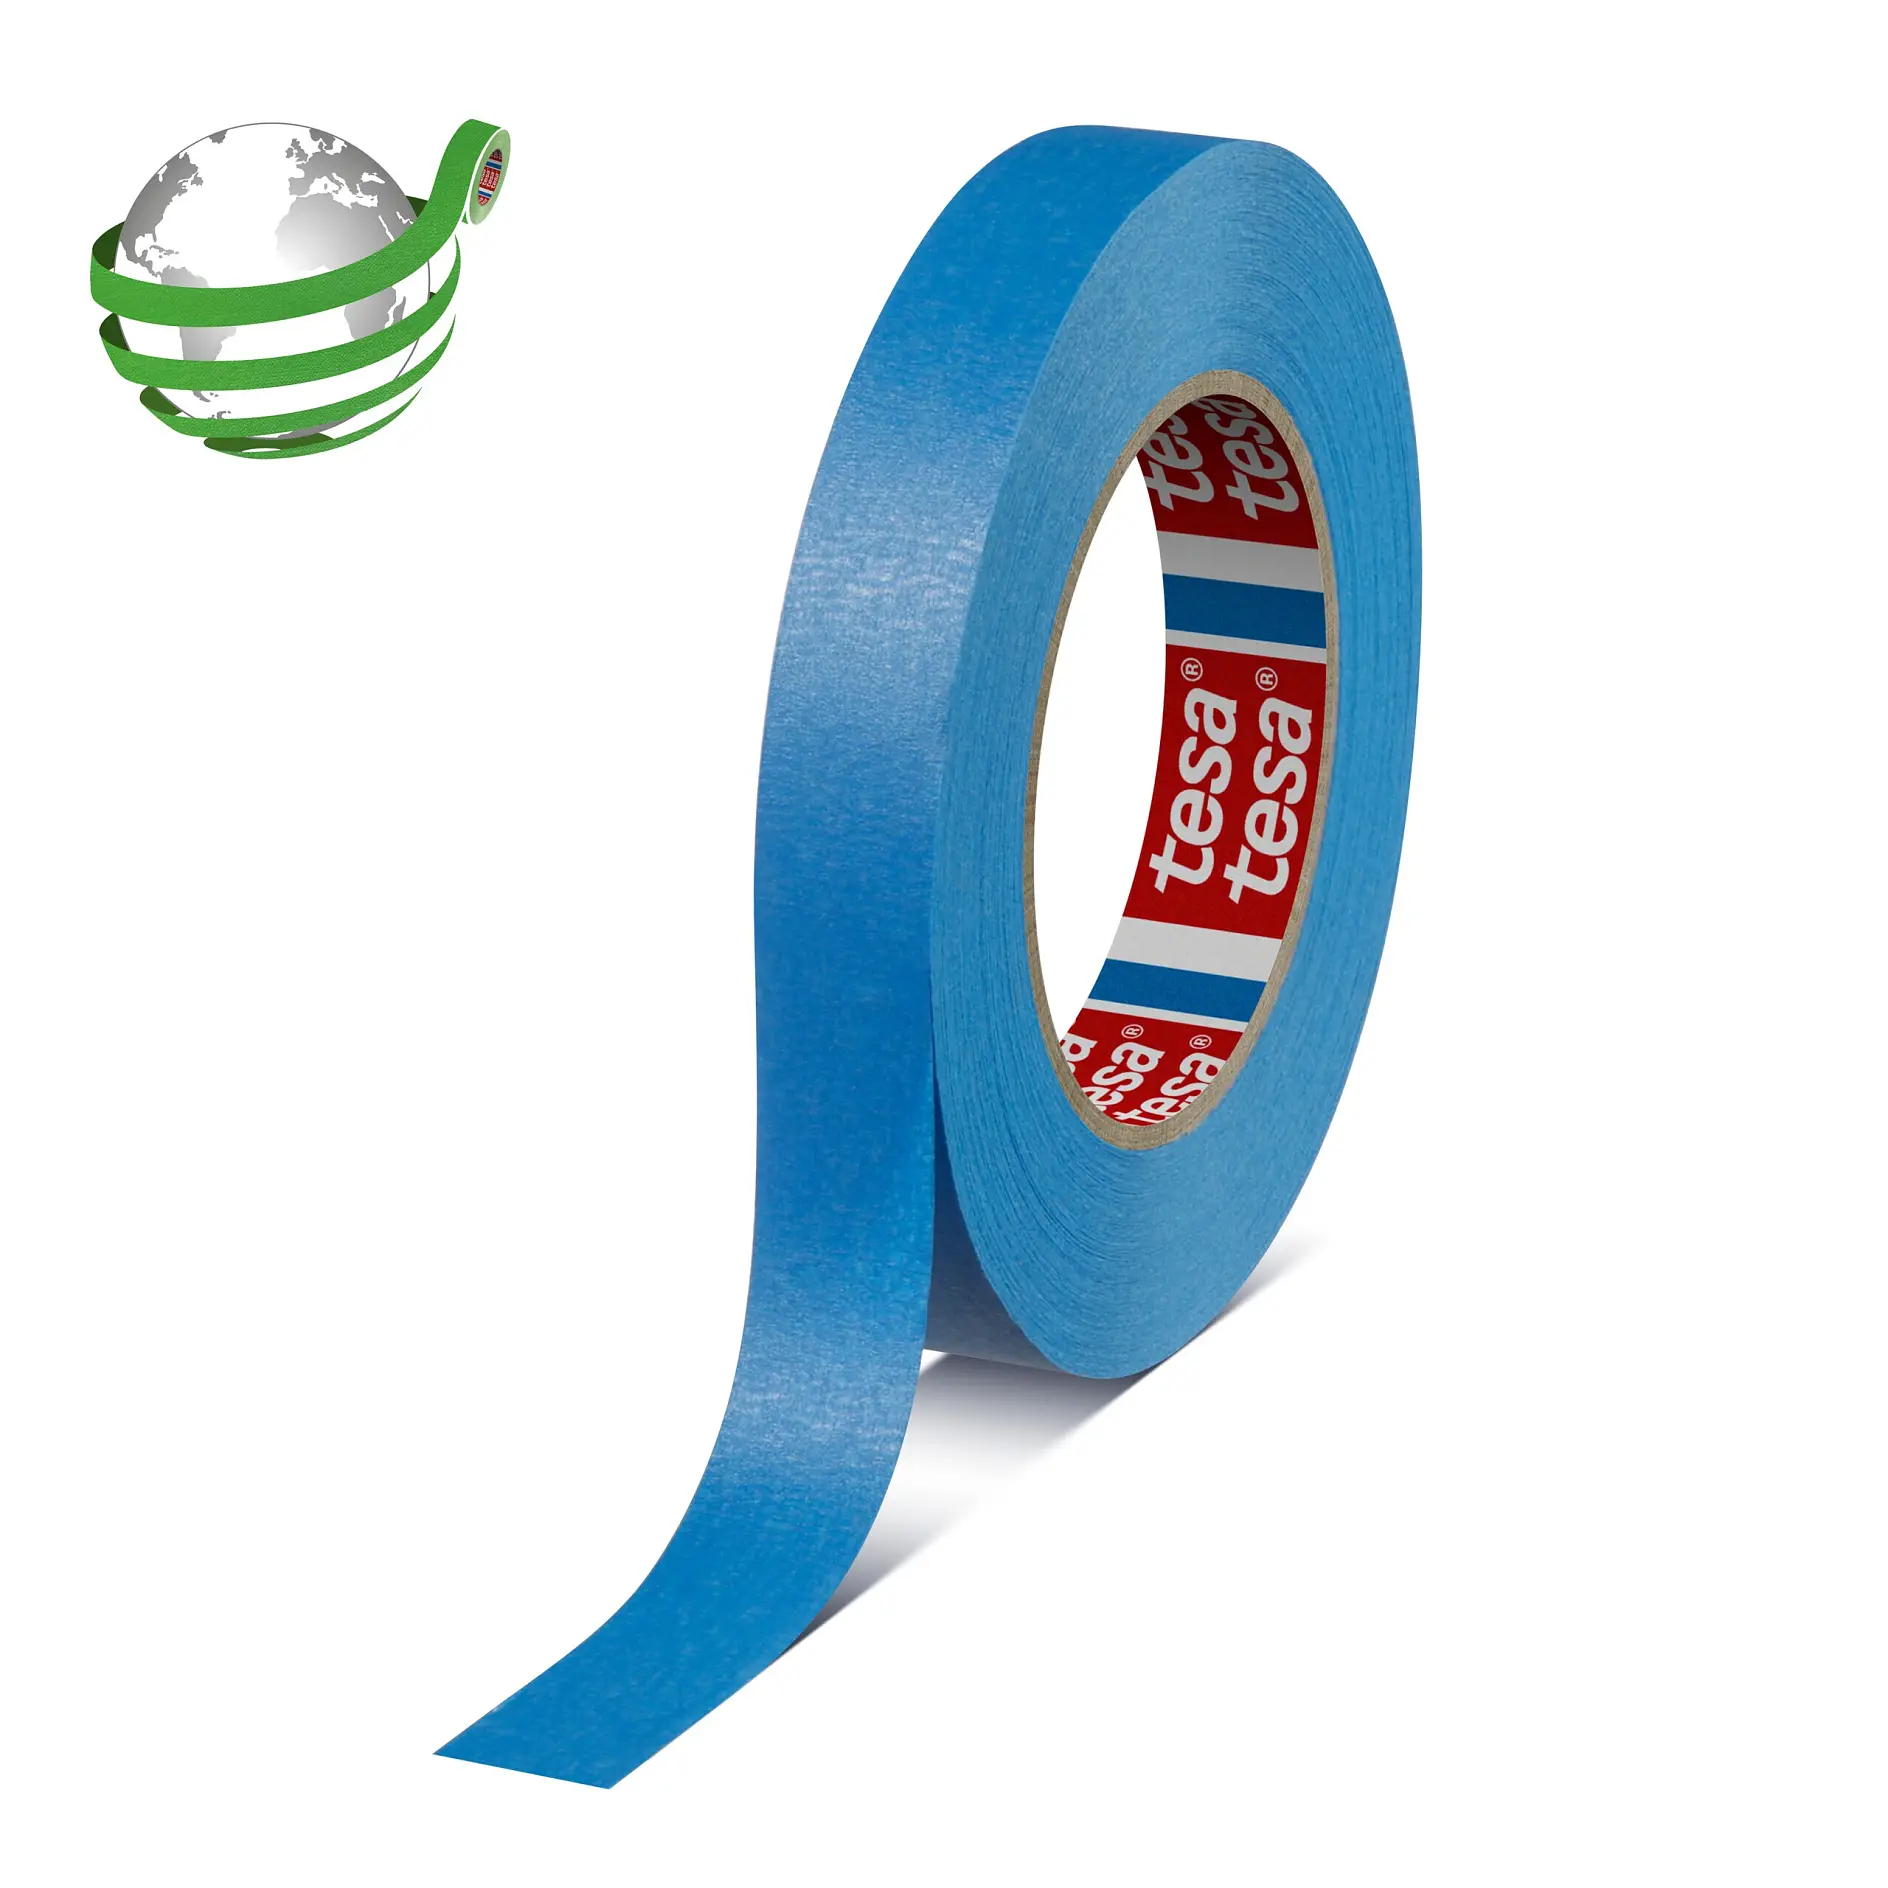 tesa-4328-quality-general-purpose-paper-masking-tape-blue-043280011200-pr-with-marker